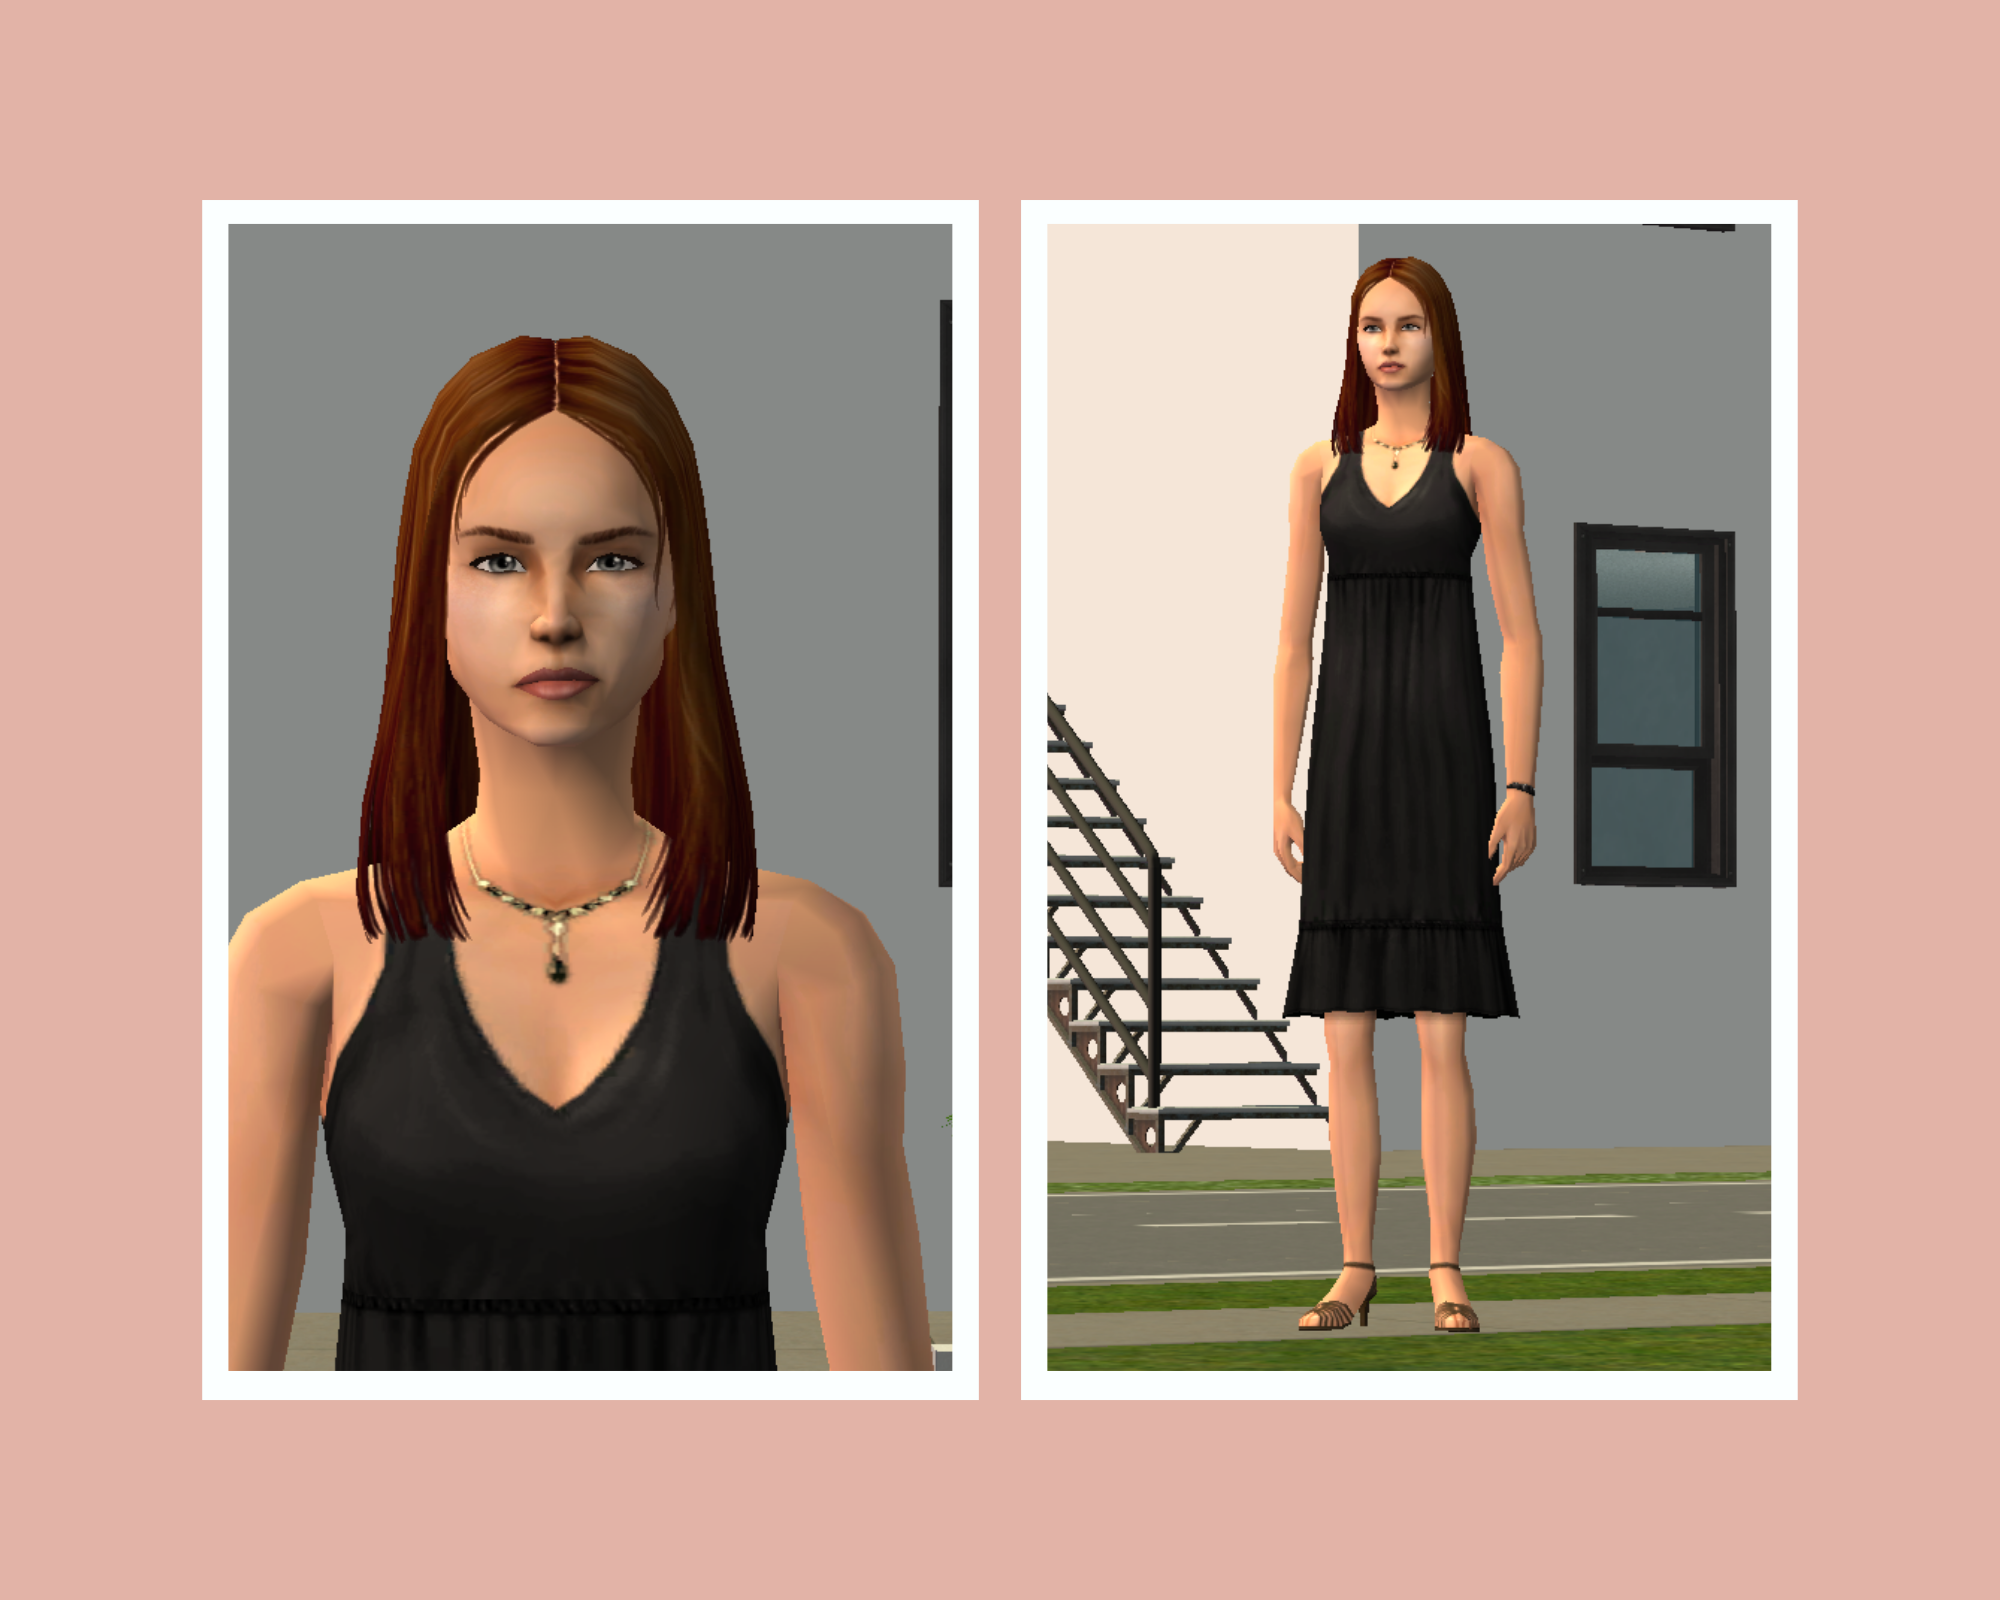 Mod The Sims Lana Del Rey Cc Free